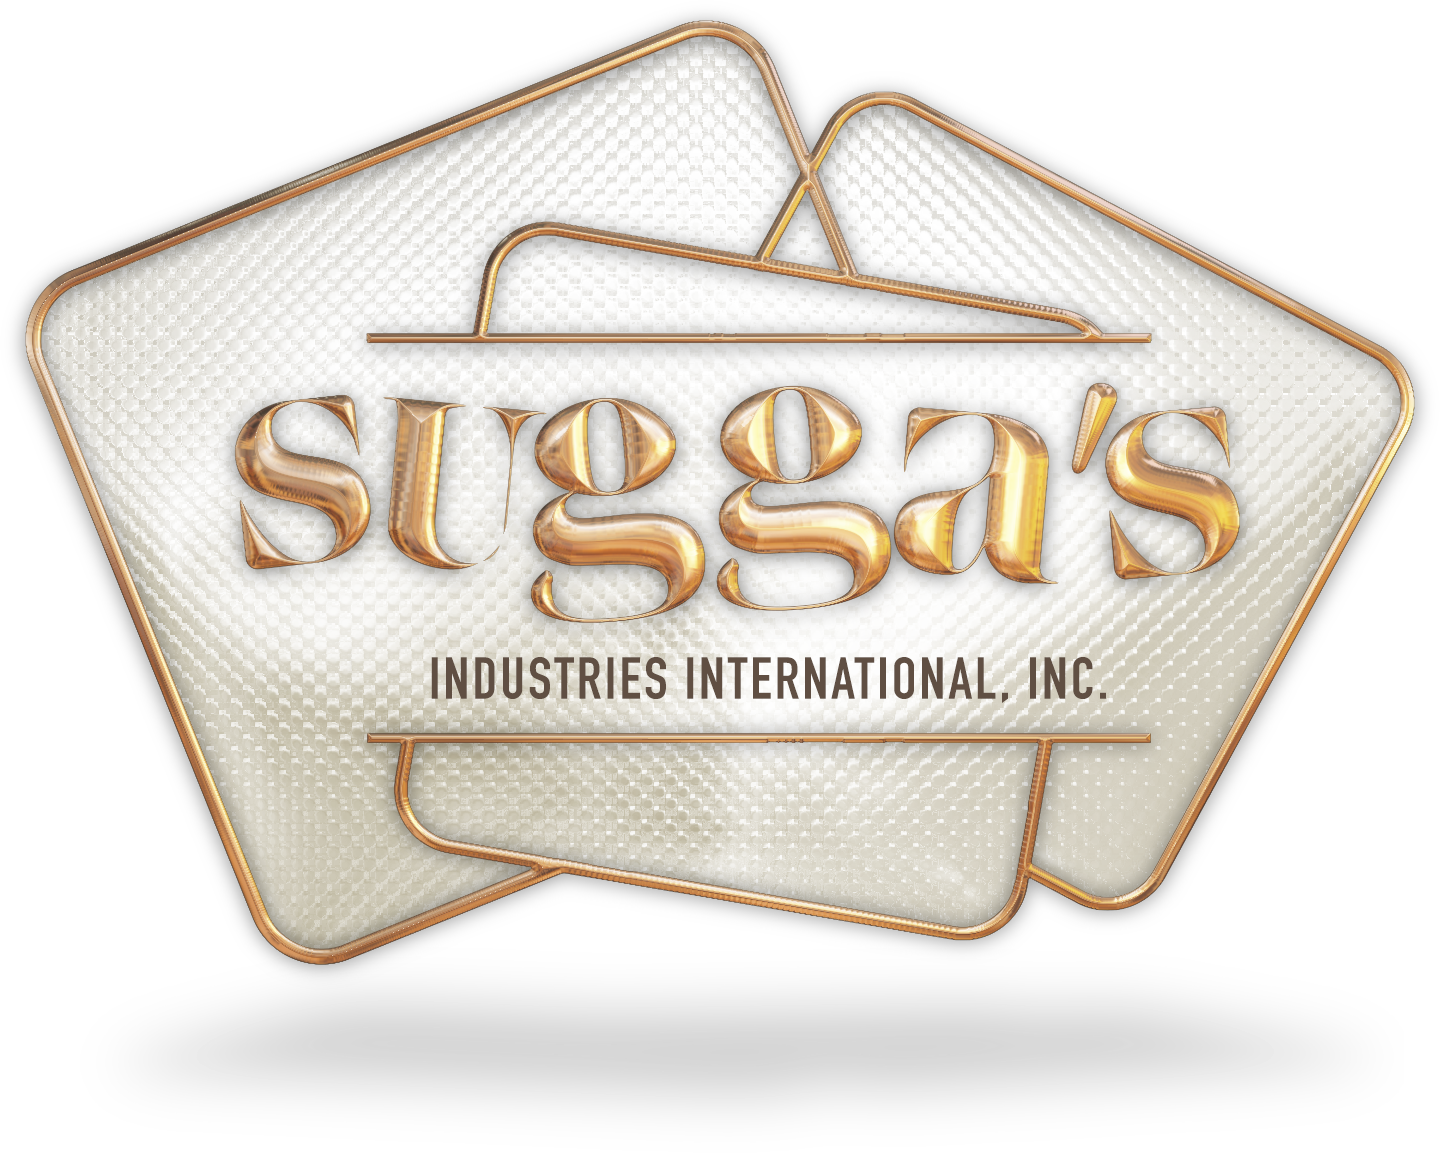 Sugga's Industries International